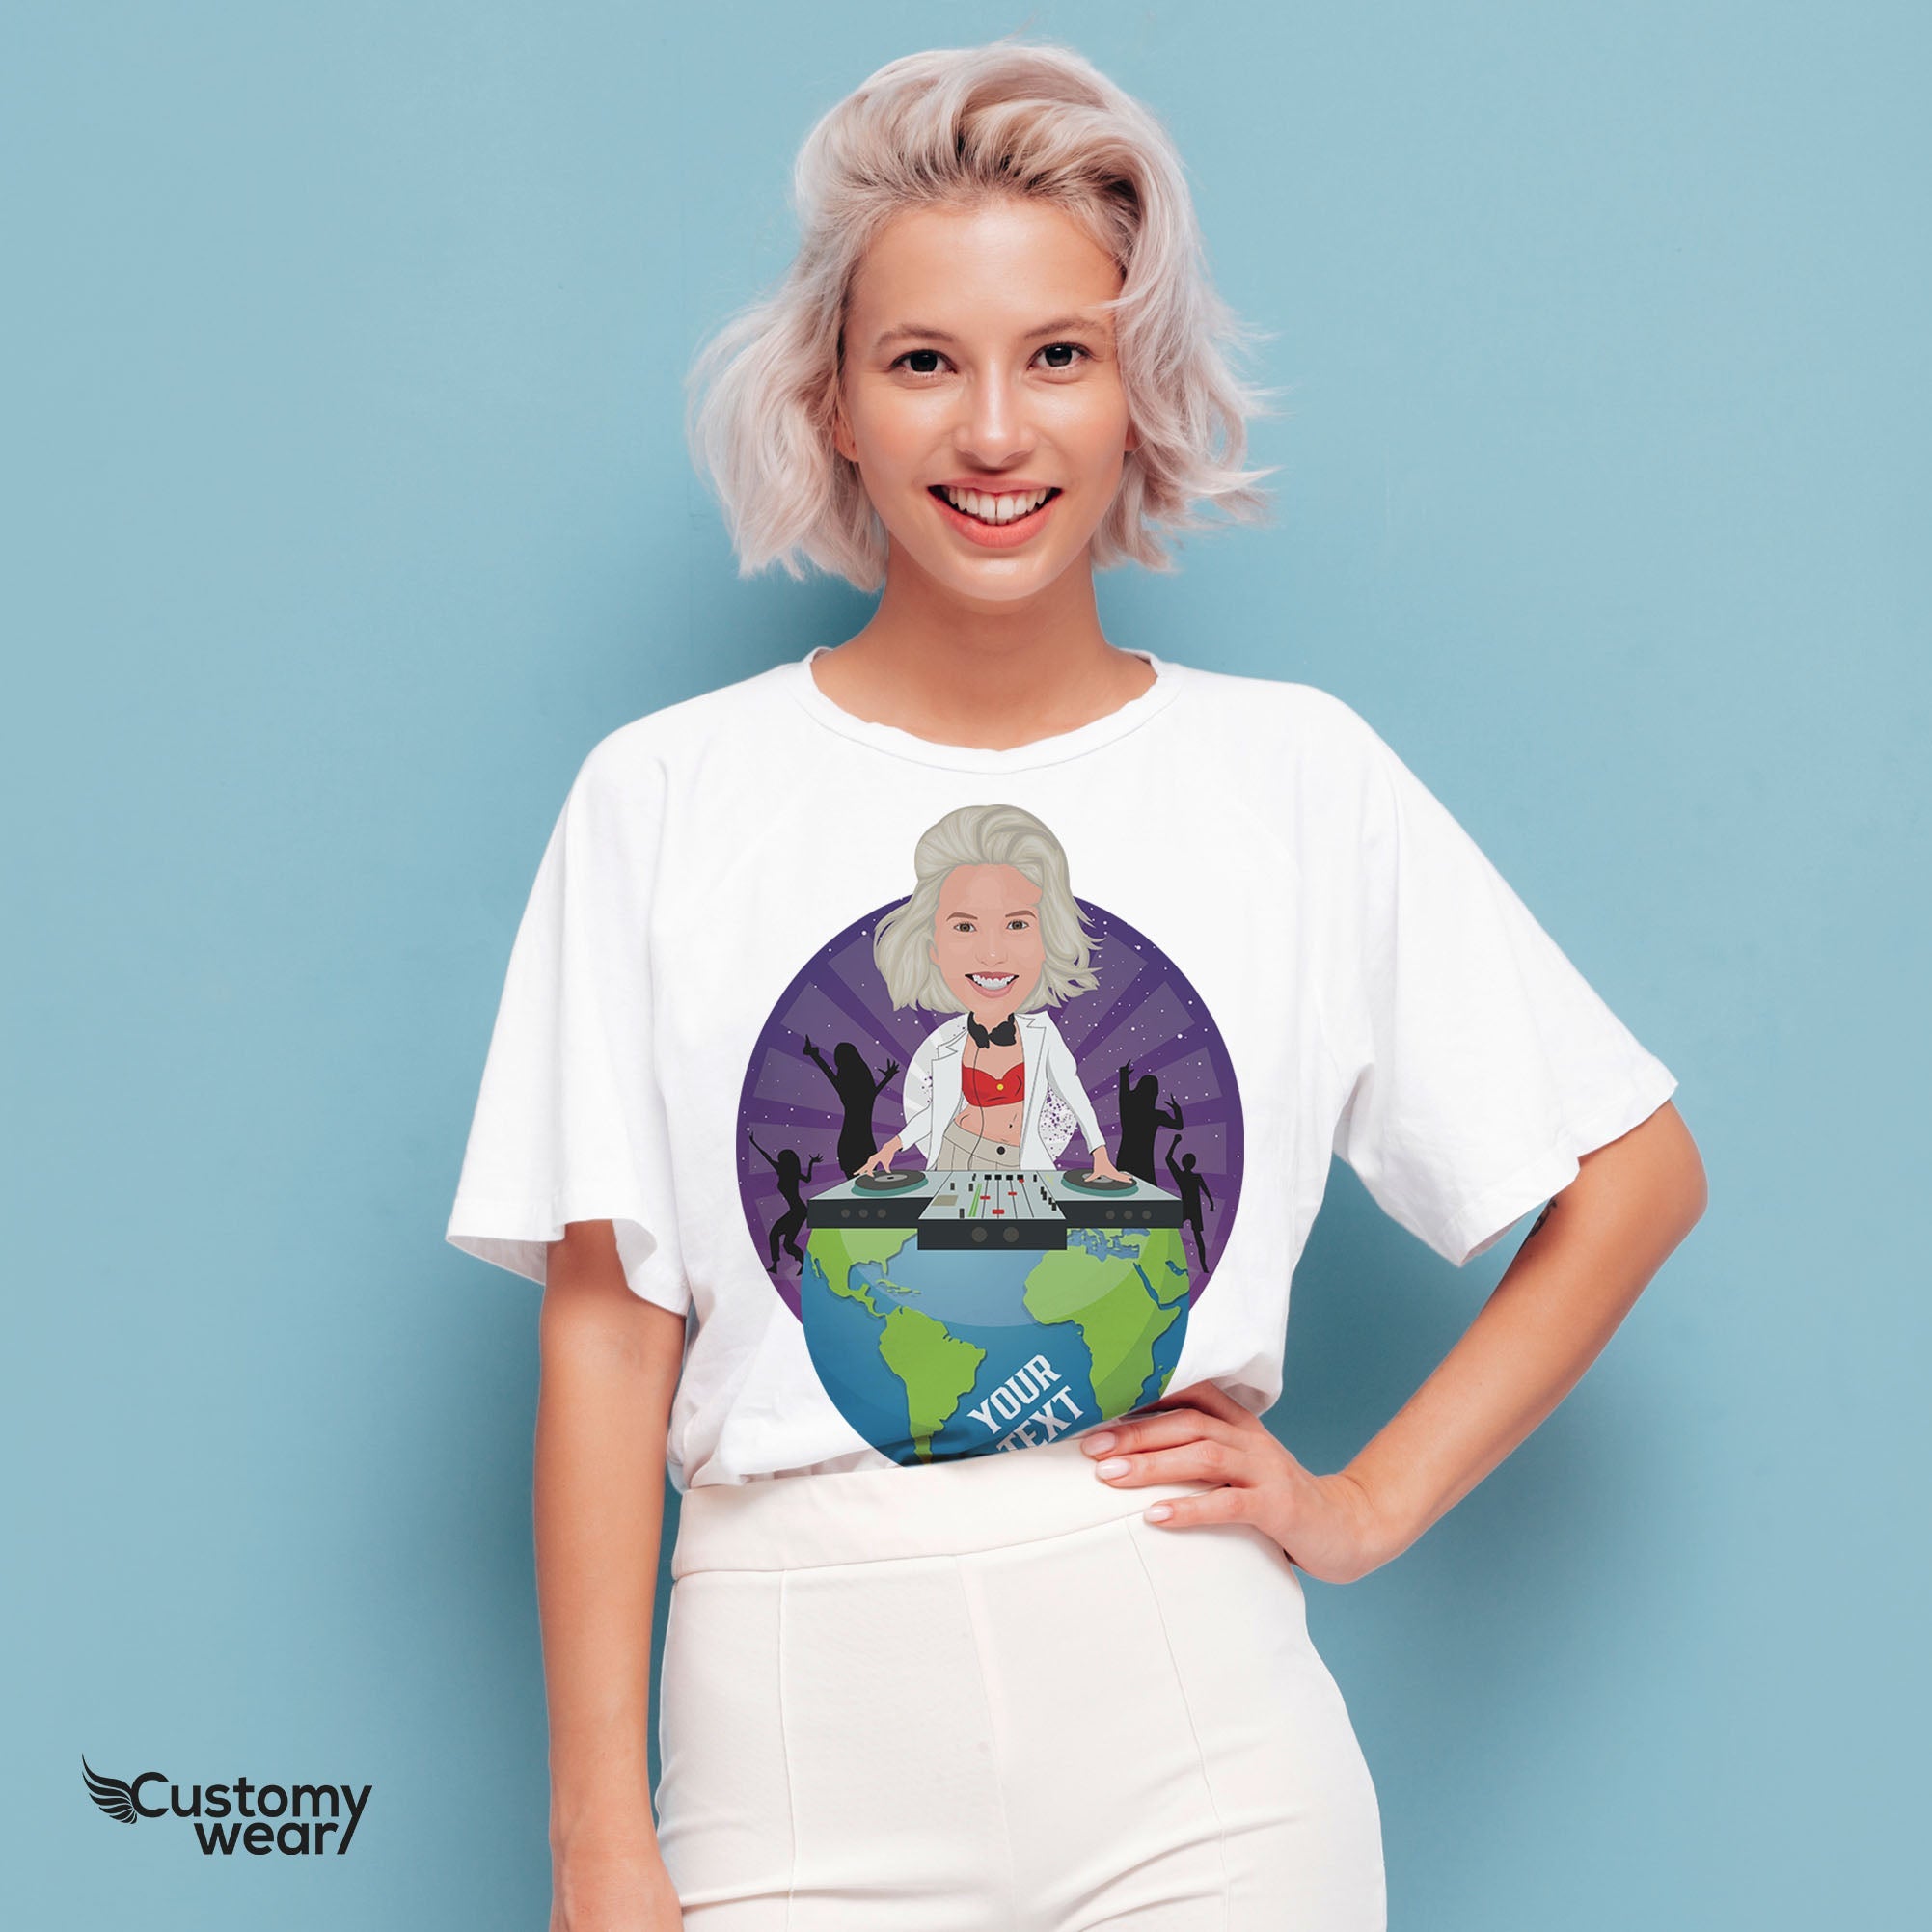 Camiseta personalizada DJ Globe para mujer  Camiseta personalizada de  música de DJ - Customywear